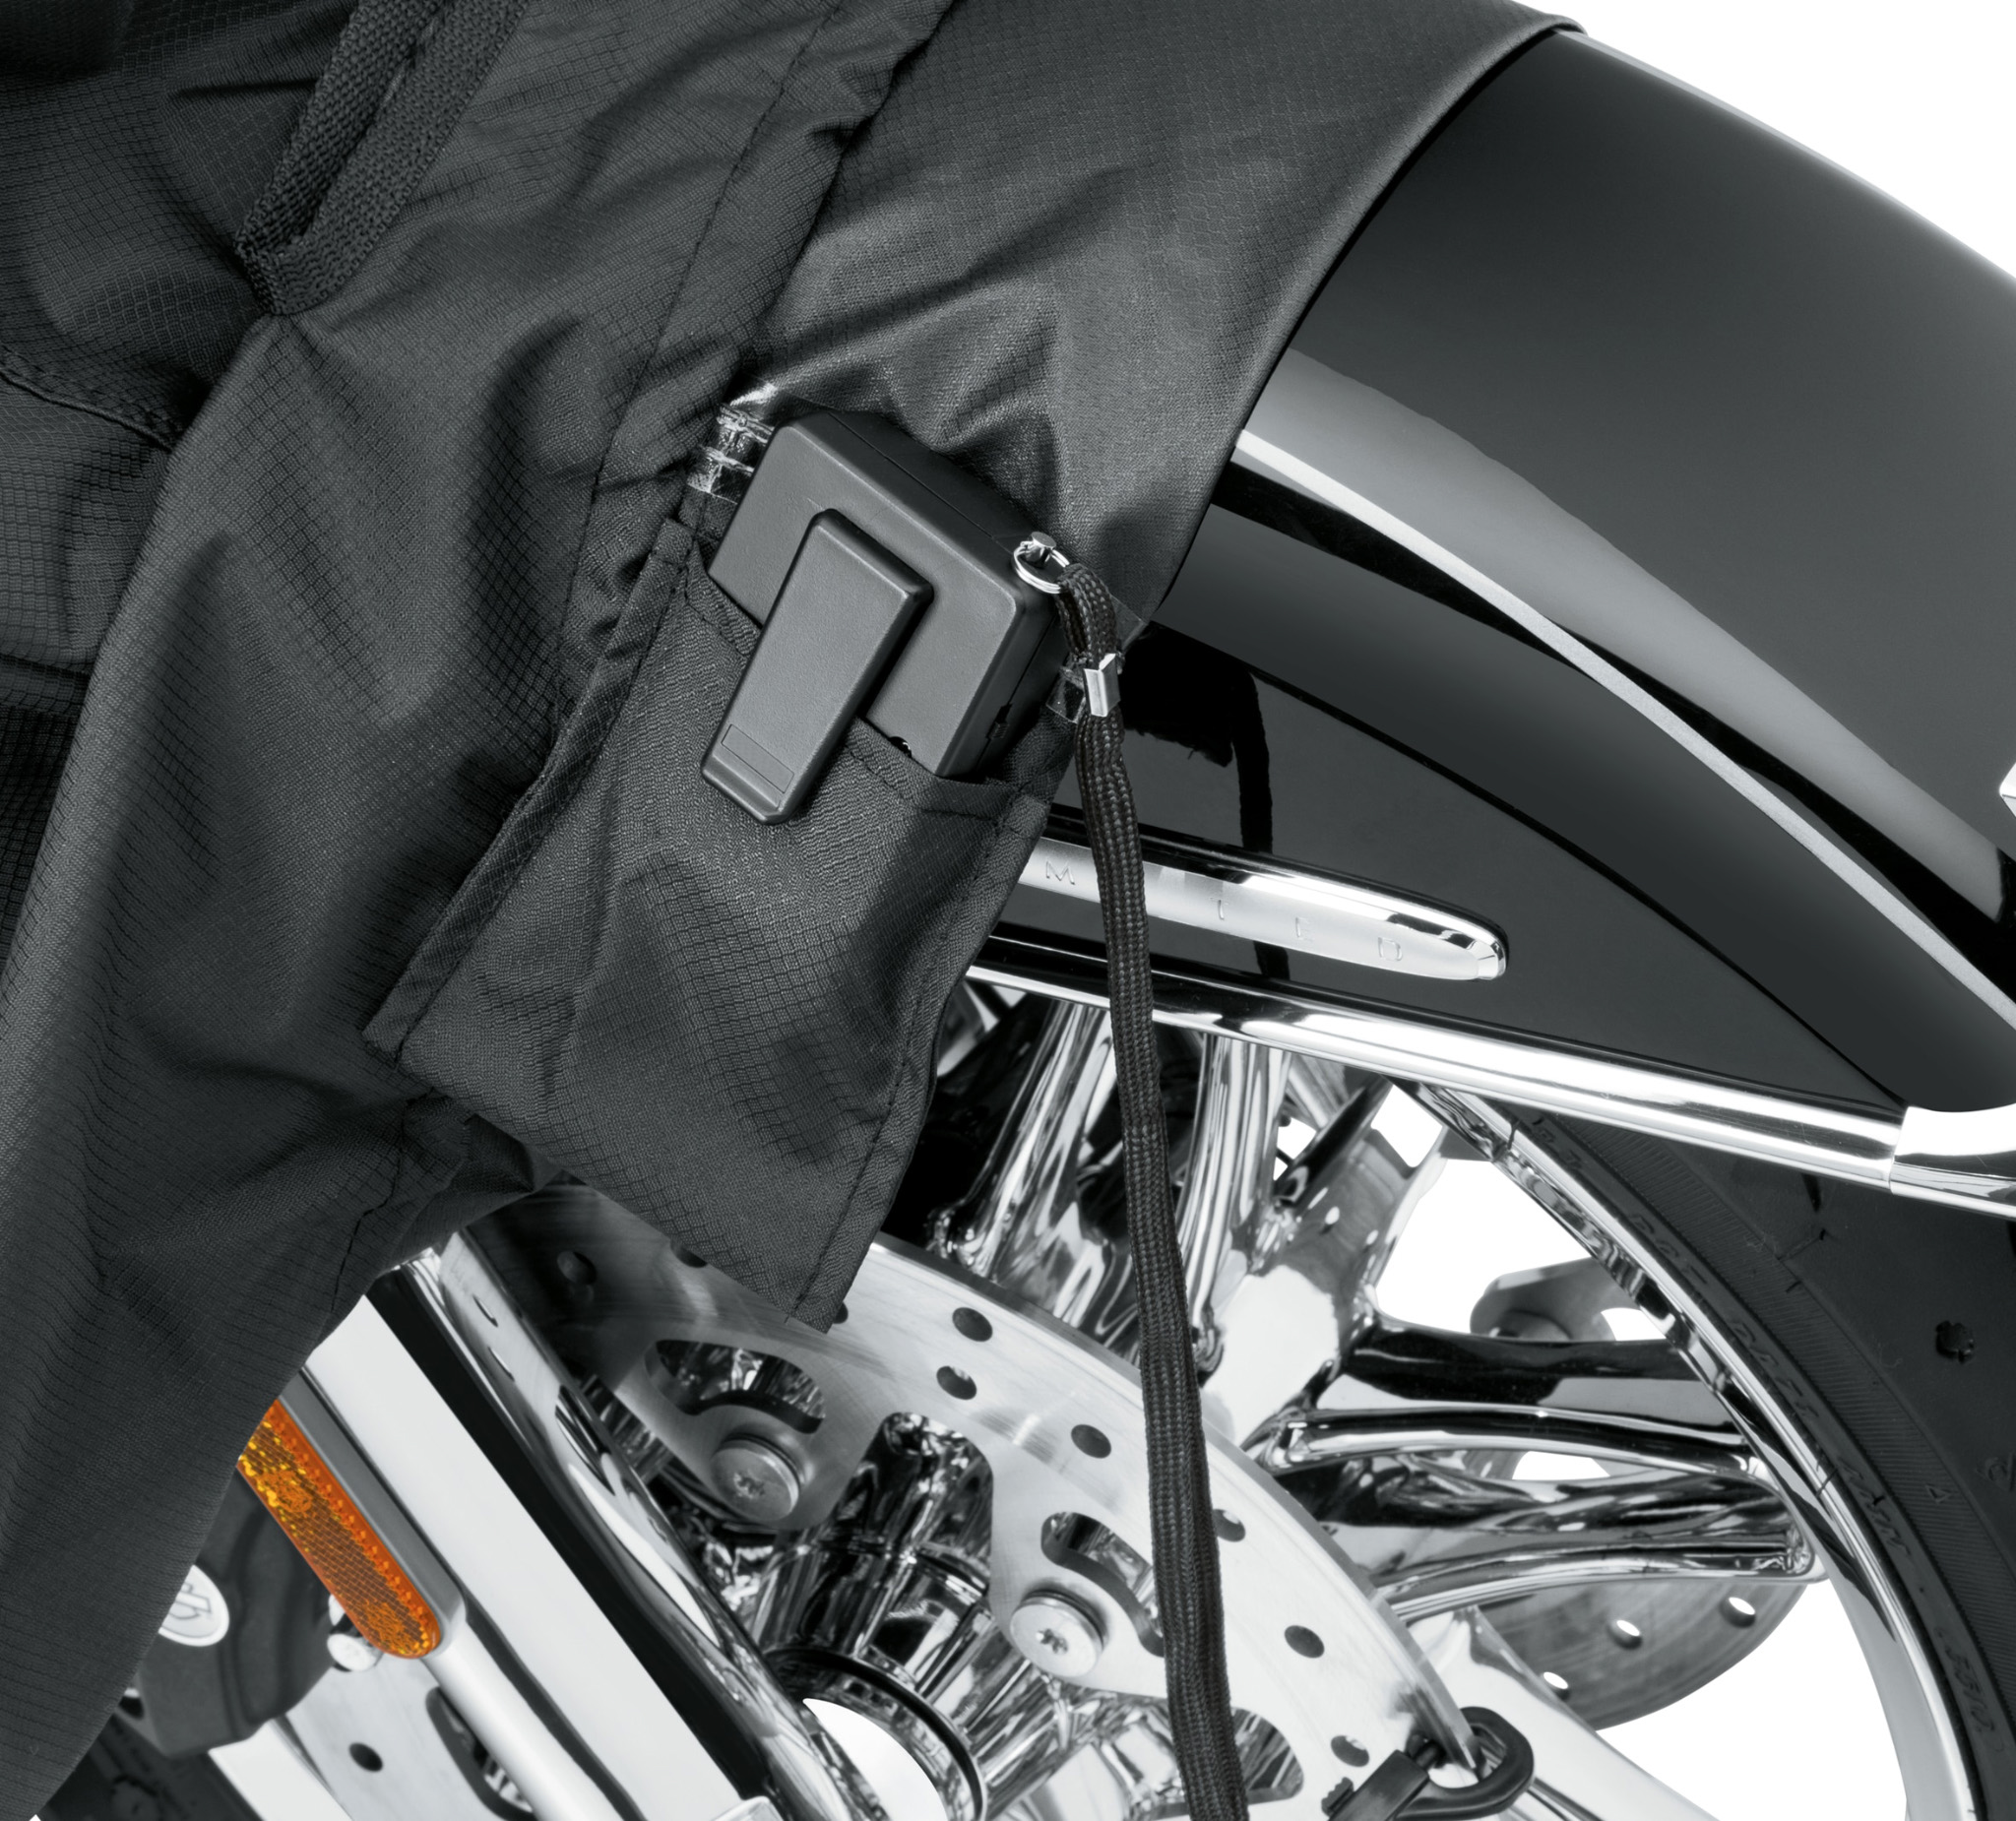 KABATEN Motorcycle Cover Medium Waterproof Outdoor & Indoor Durable for Heavy Duty All Season Protector Fits up to 104inch Motors Harley Davison Motorcycle Accessories. 